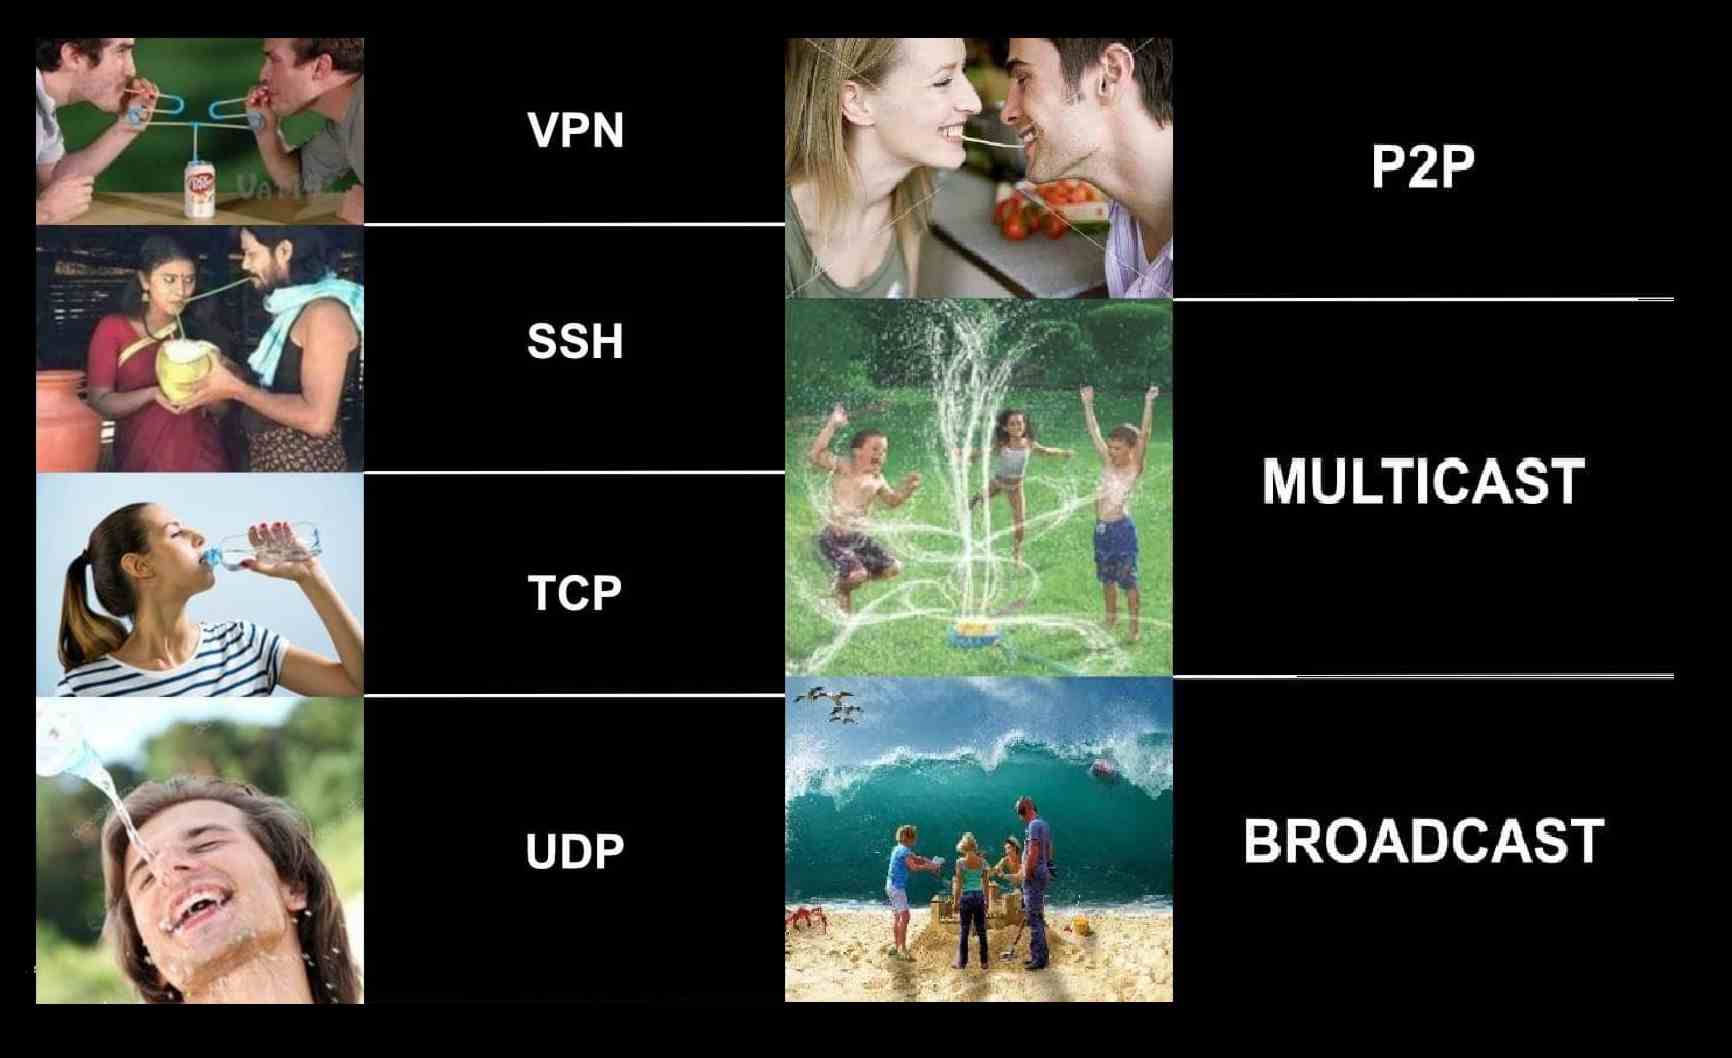 Network protocols visually explained